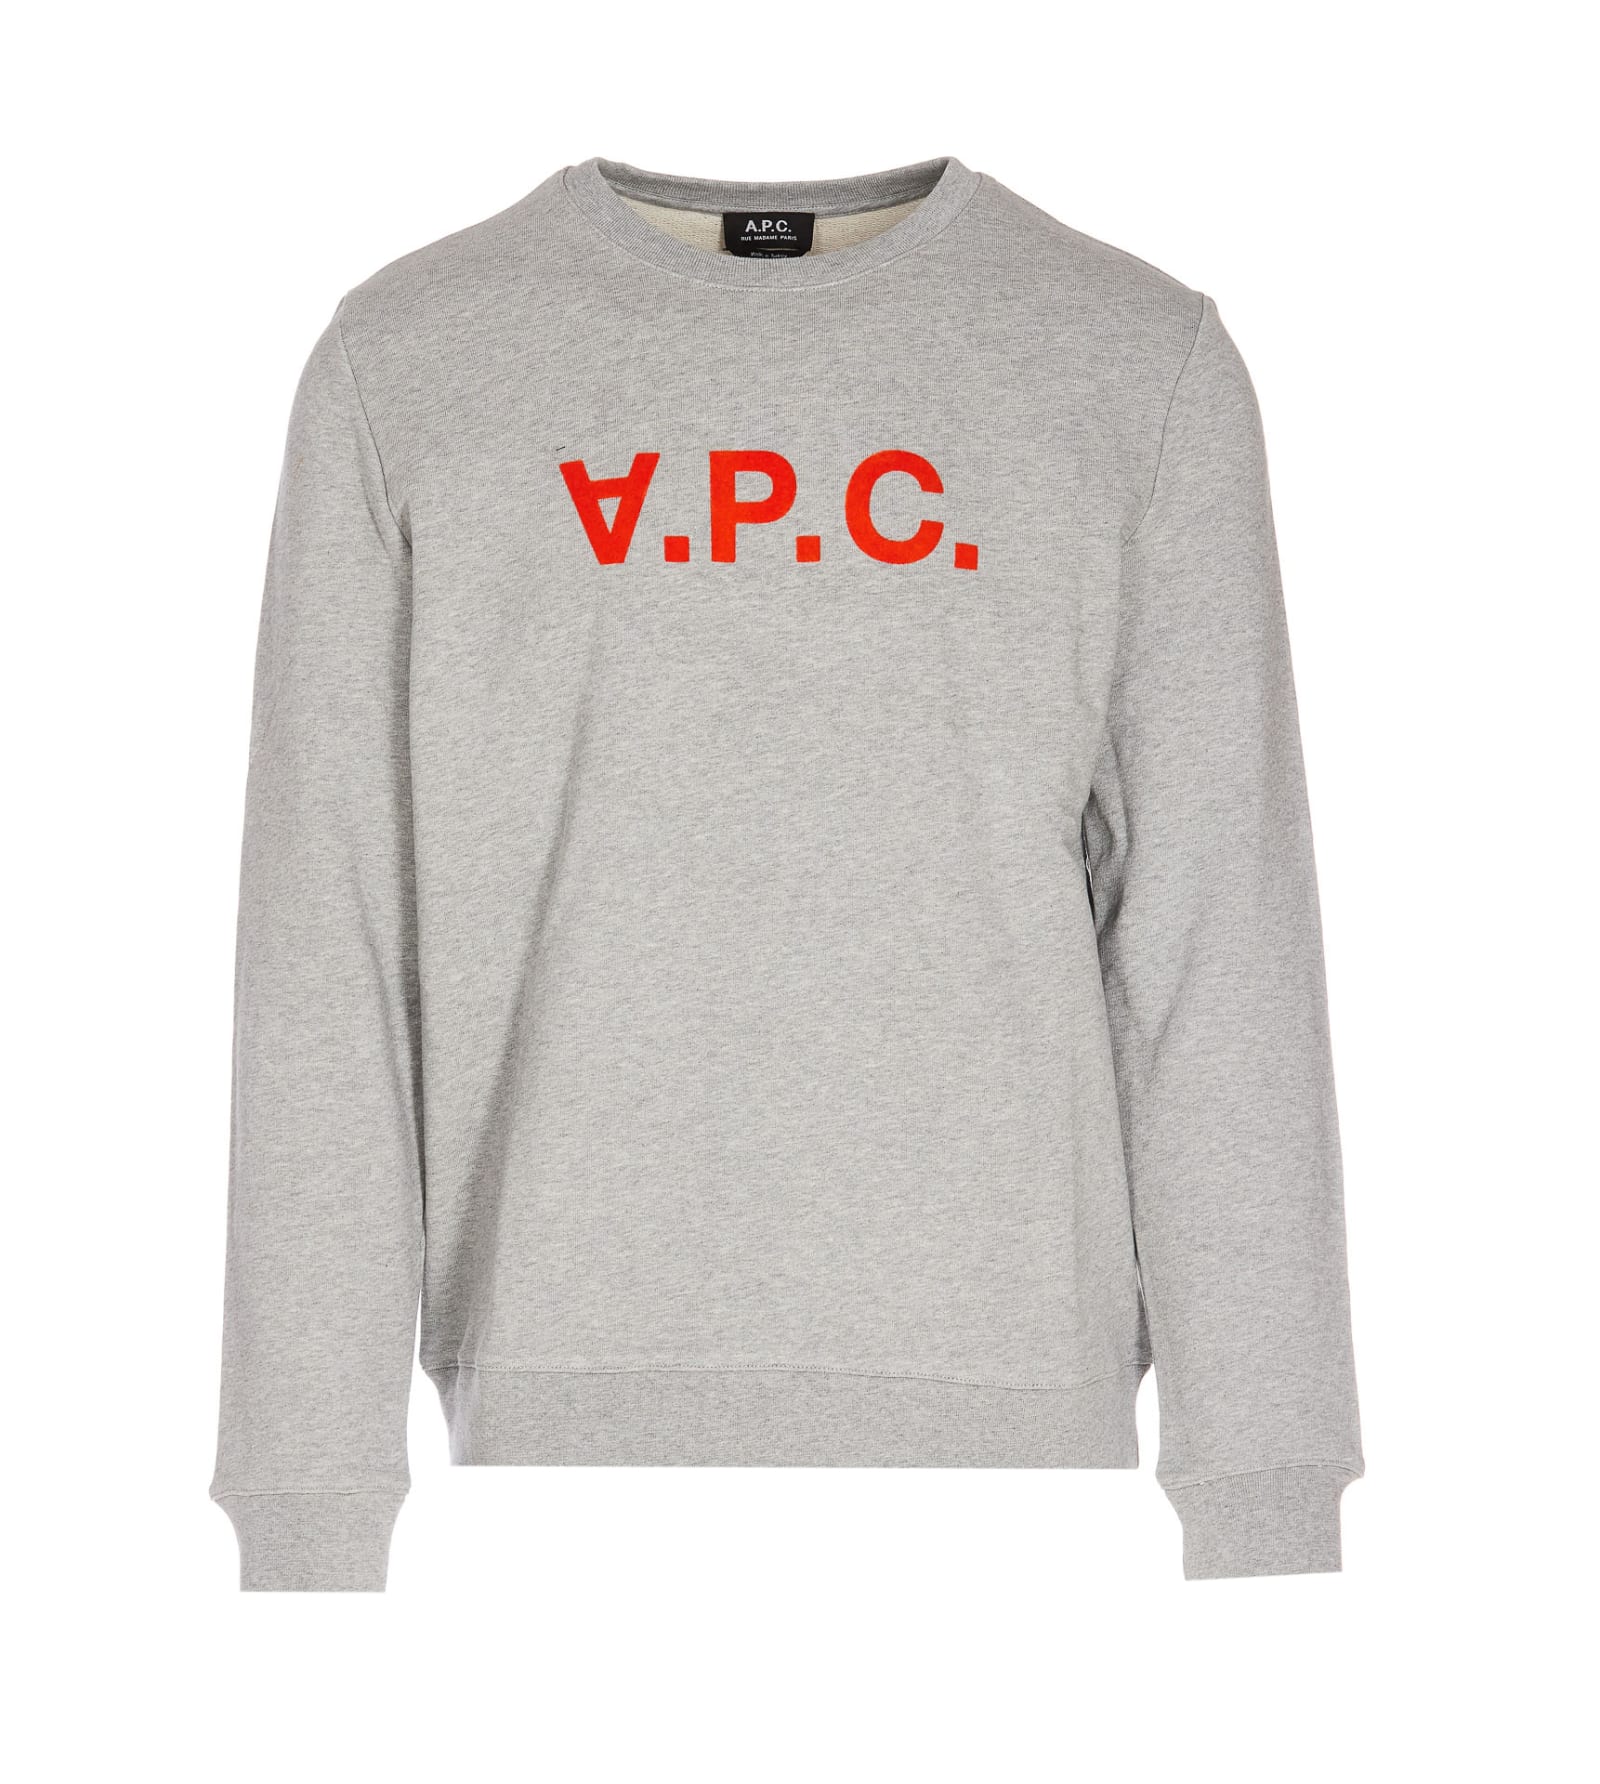 A.P.C. Vpc Logo Sweatshirt